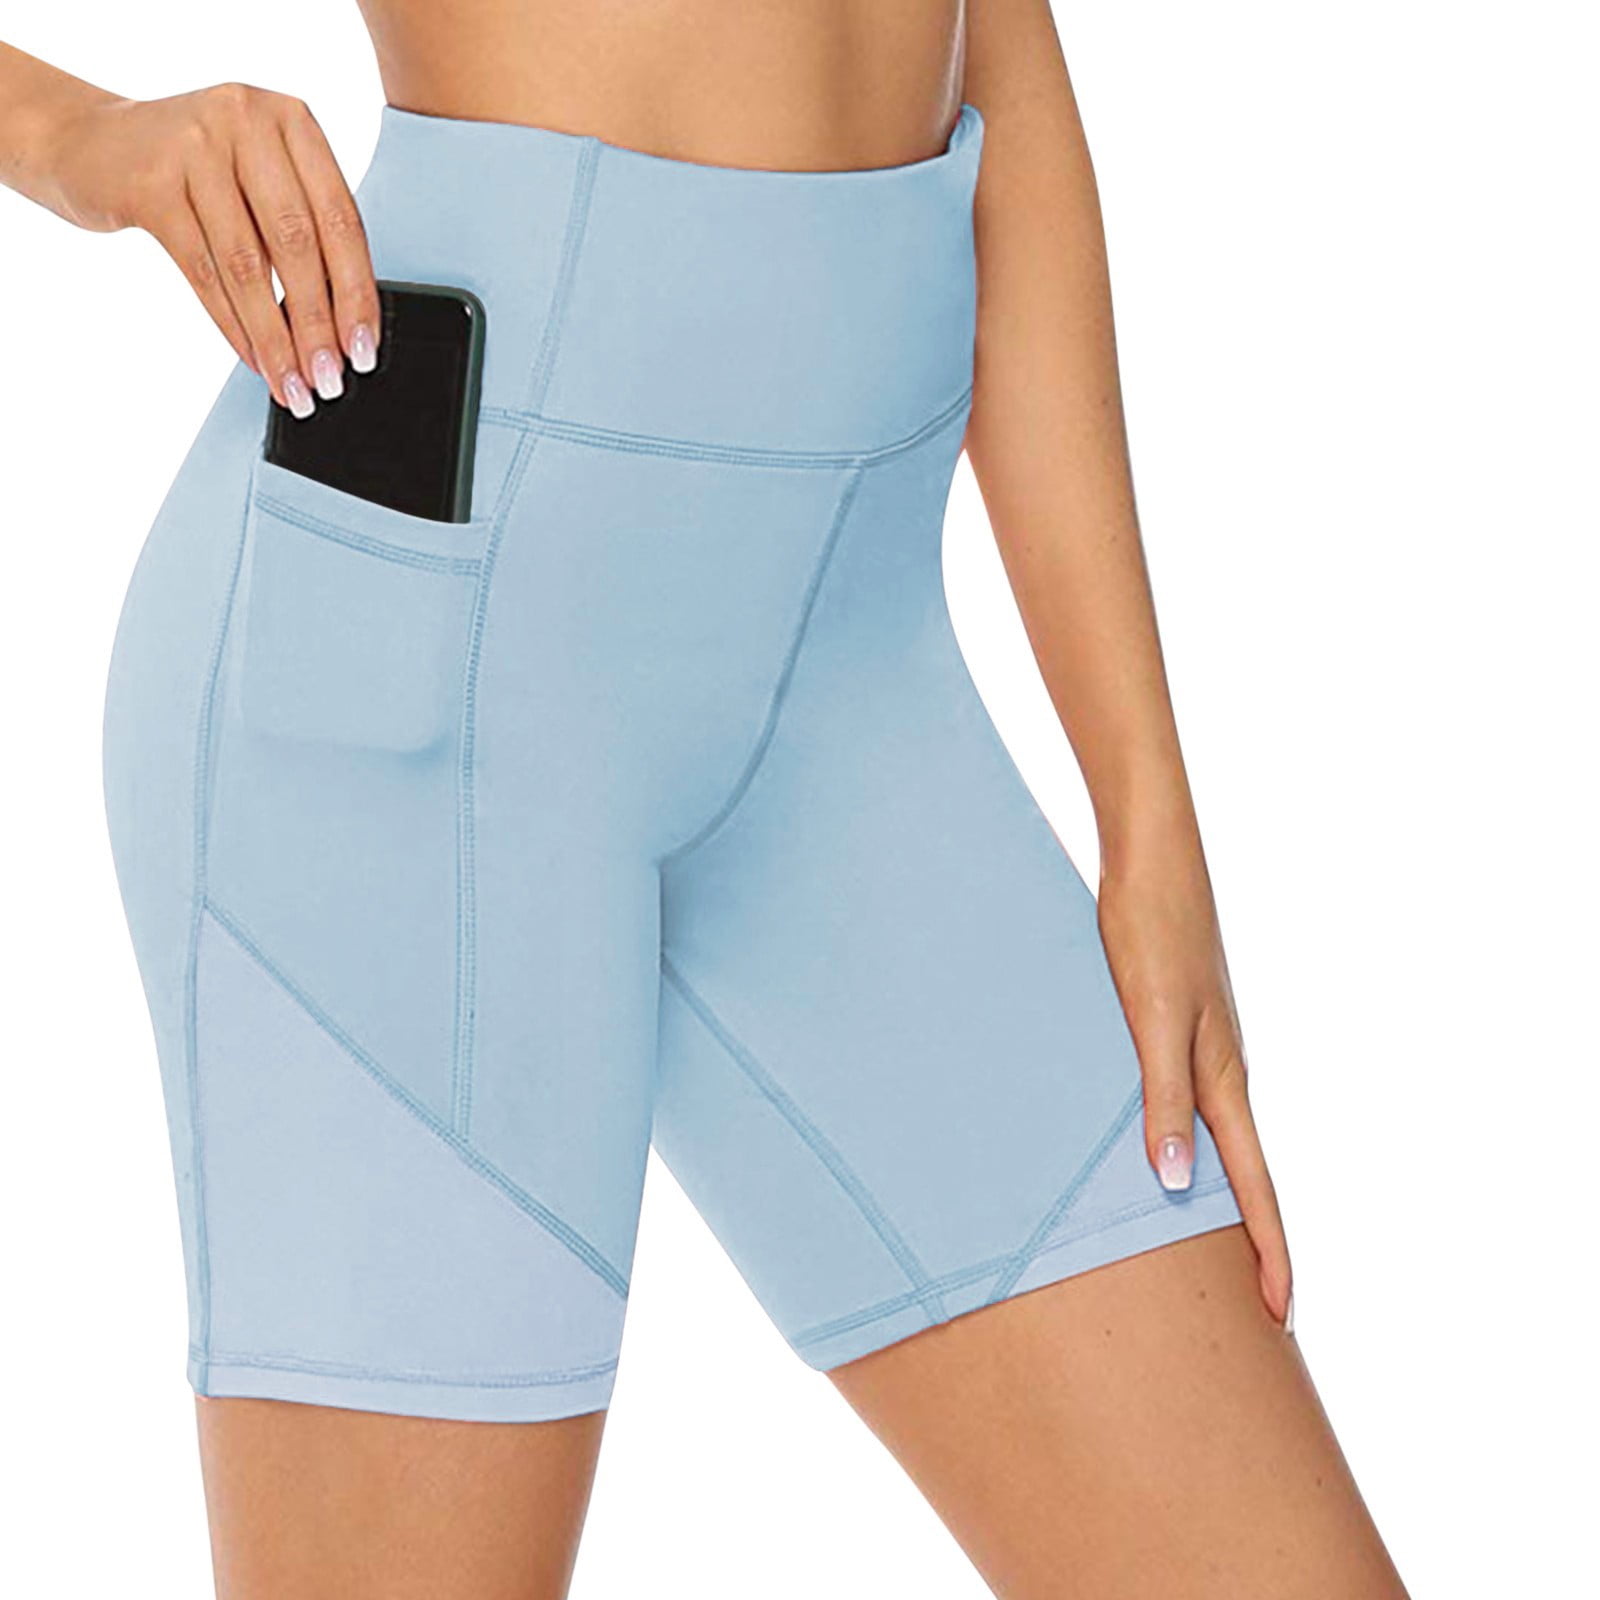 Podplug Yoga Pants with Pockets, Women's High Waist Yoga Short